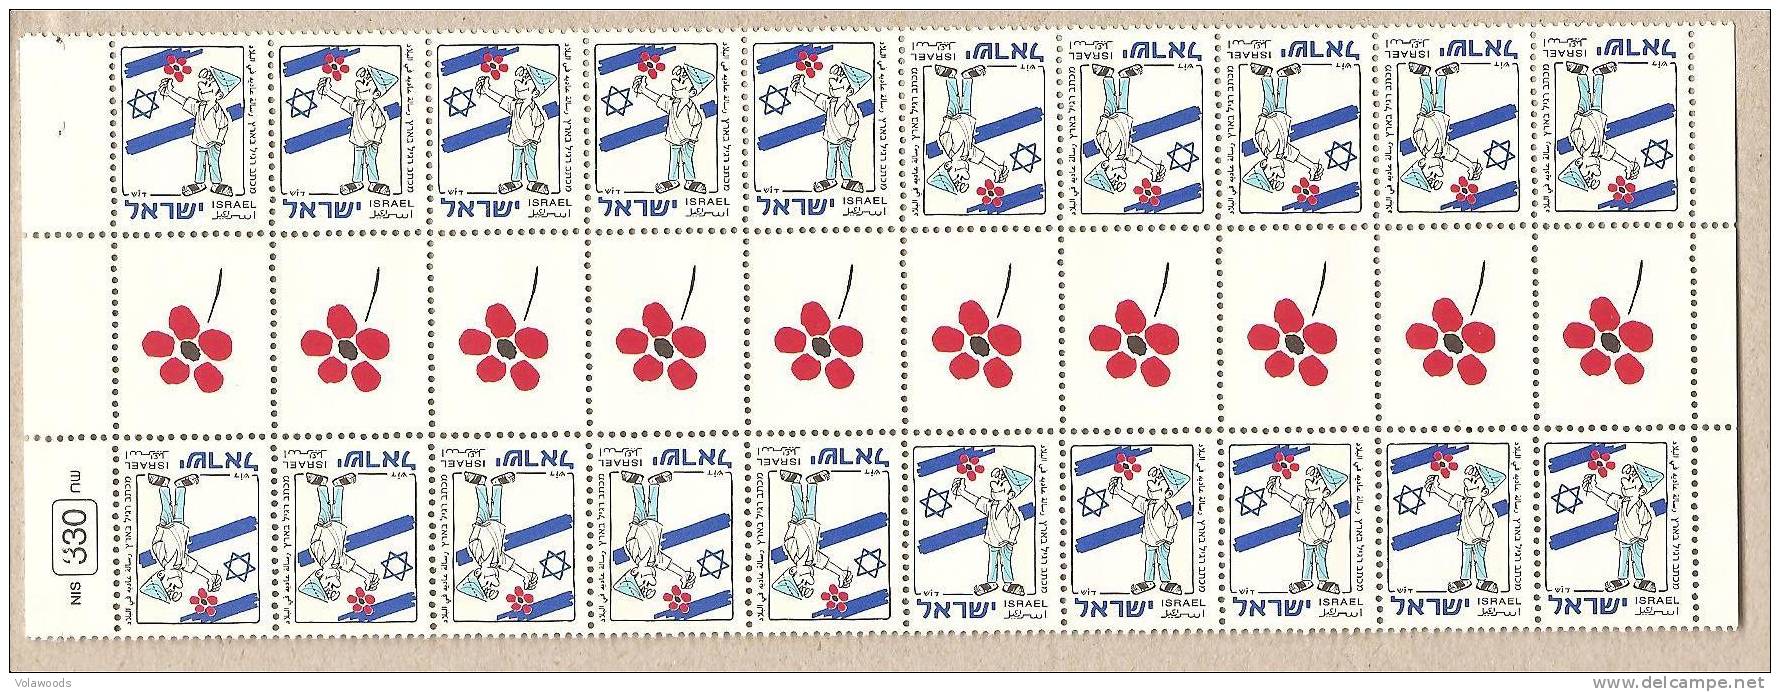 Israele - Minifoglio Nuovo - Unificato N° BF 1392 -  G - Hojas Y Bloques